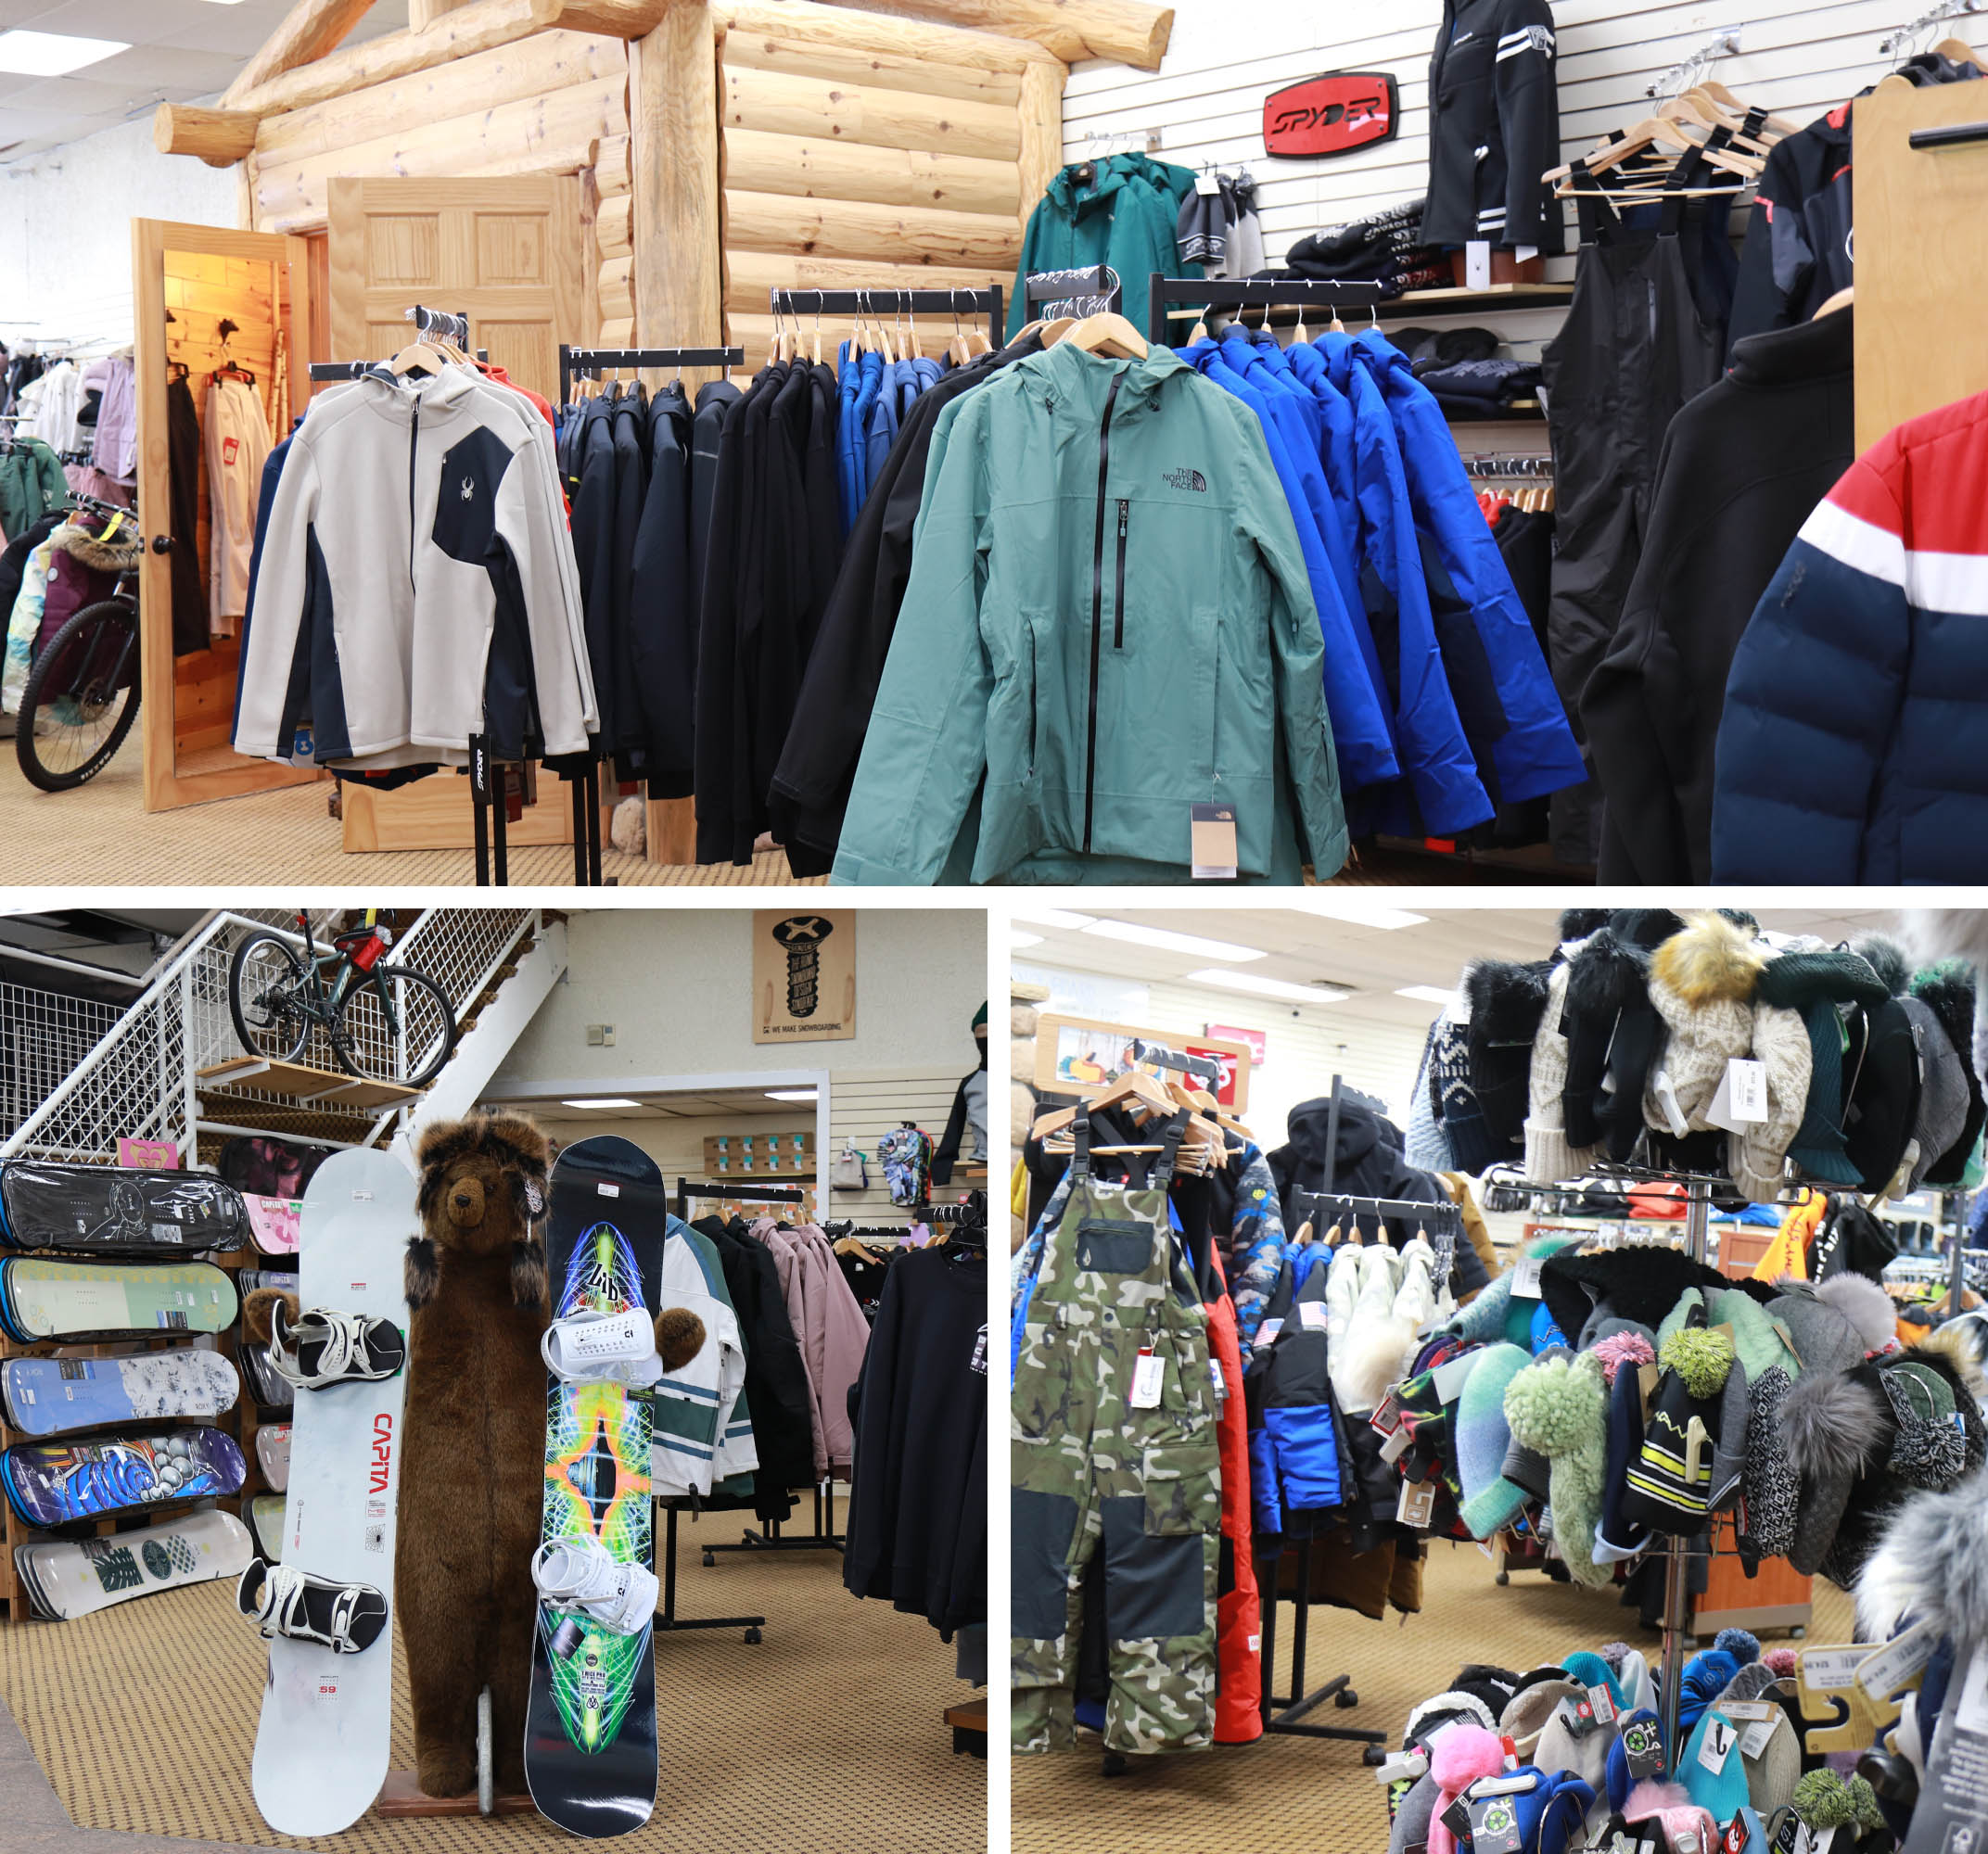 Racks of ski jackets, ski hats and snow boards are for sale inside the Shumaker Ski Shop.